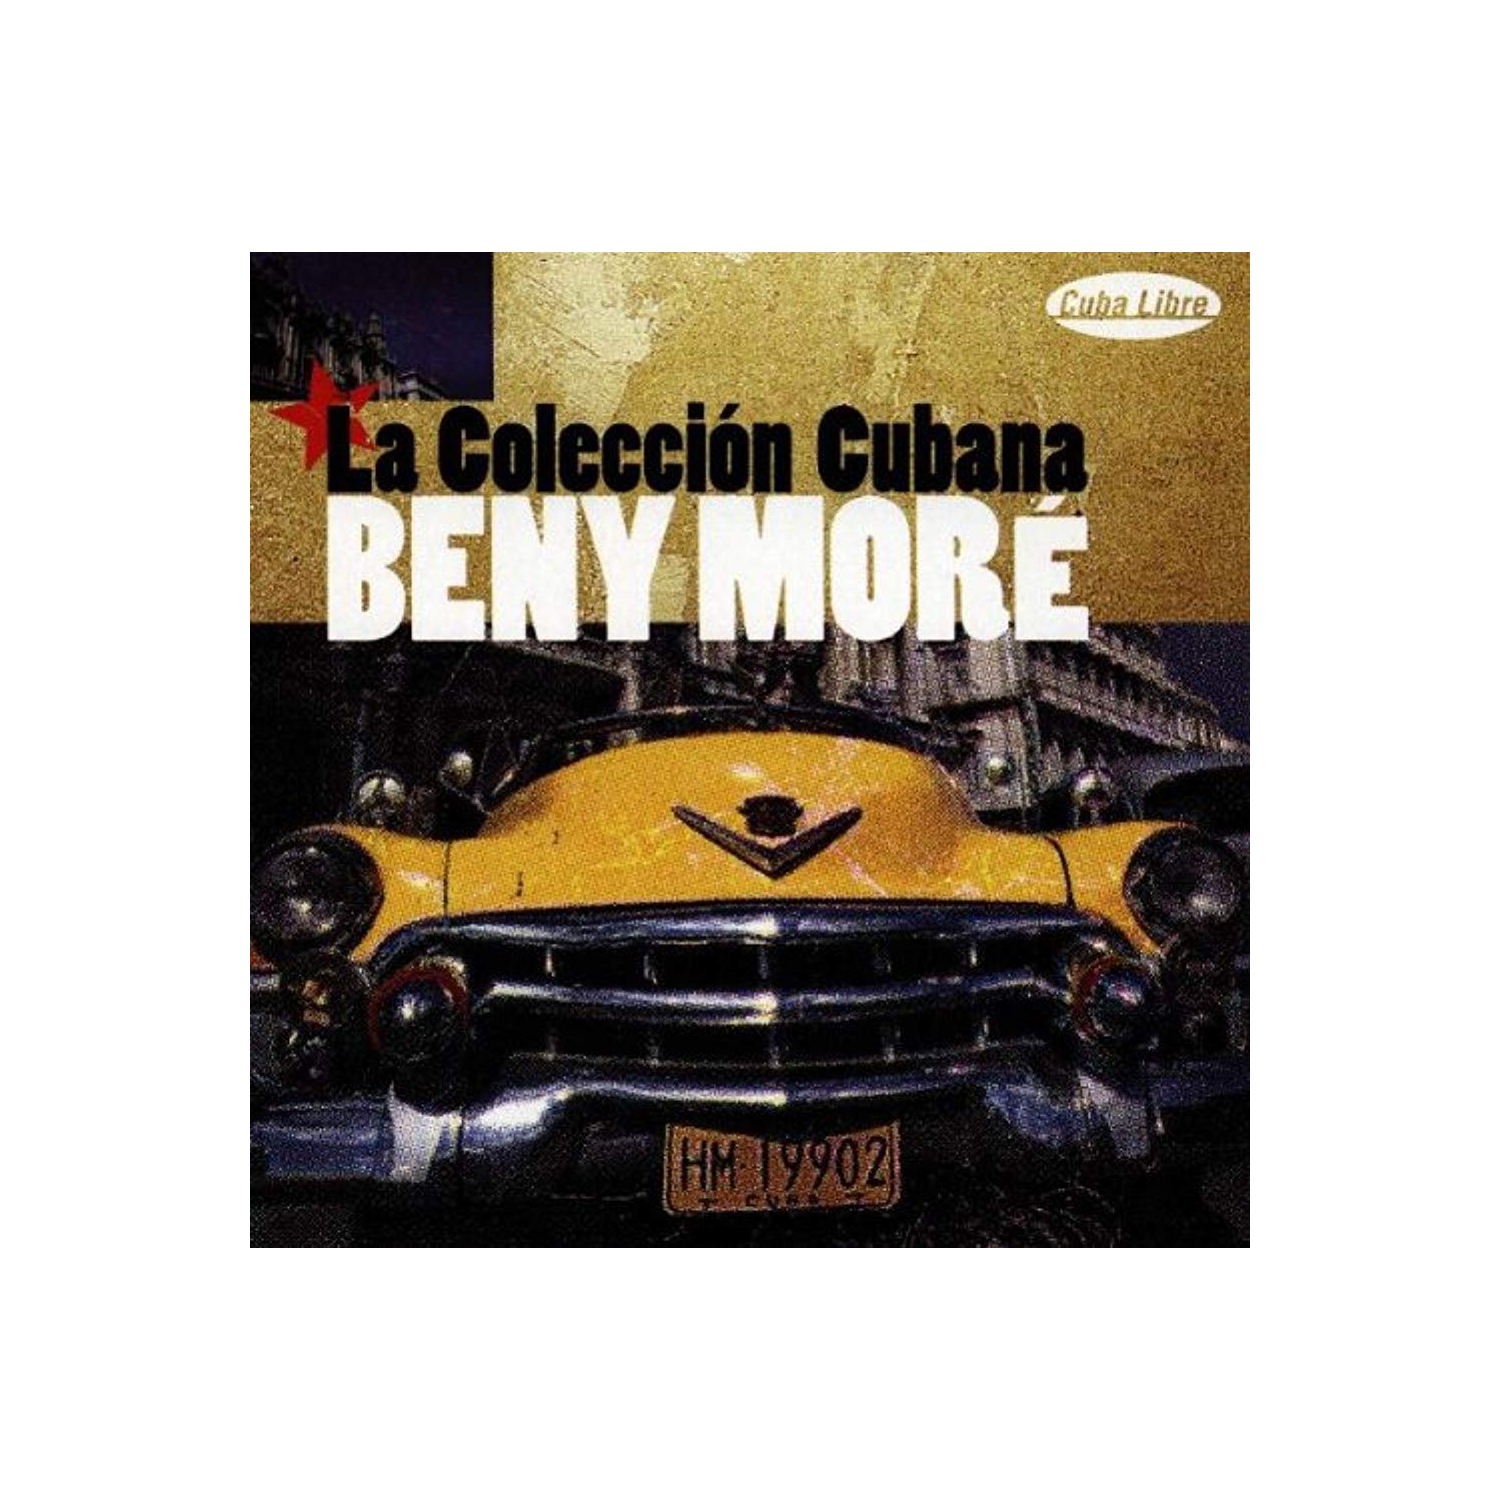 La Coleccion Cubana [Audio CD] More, Beny